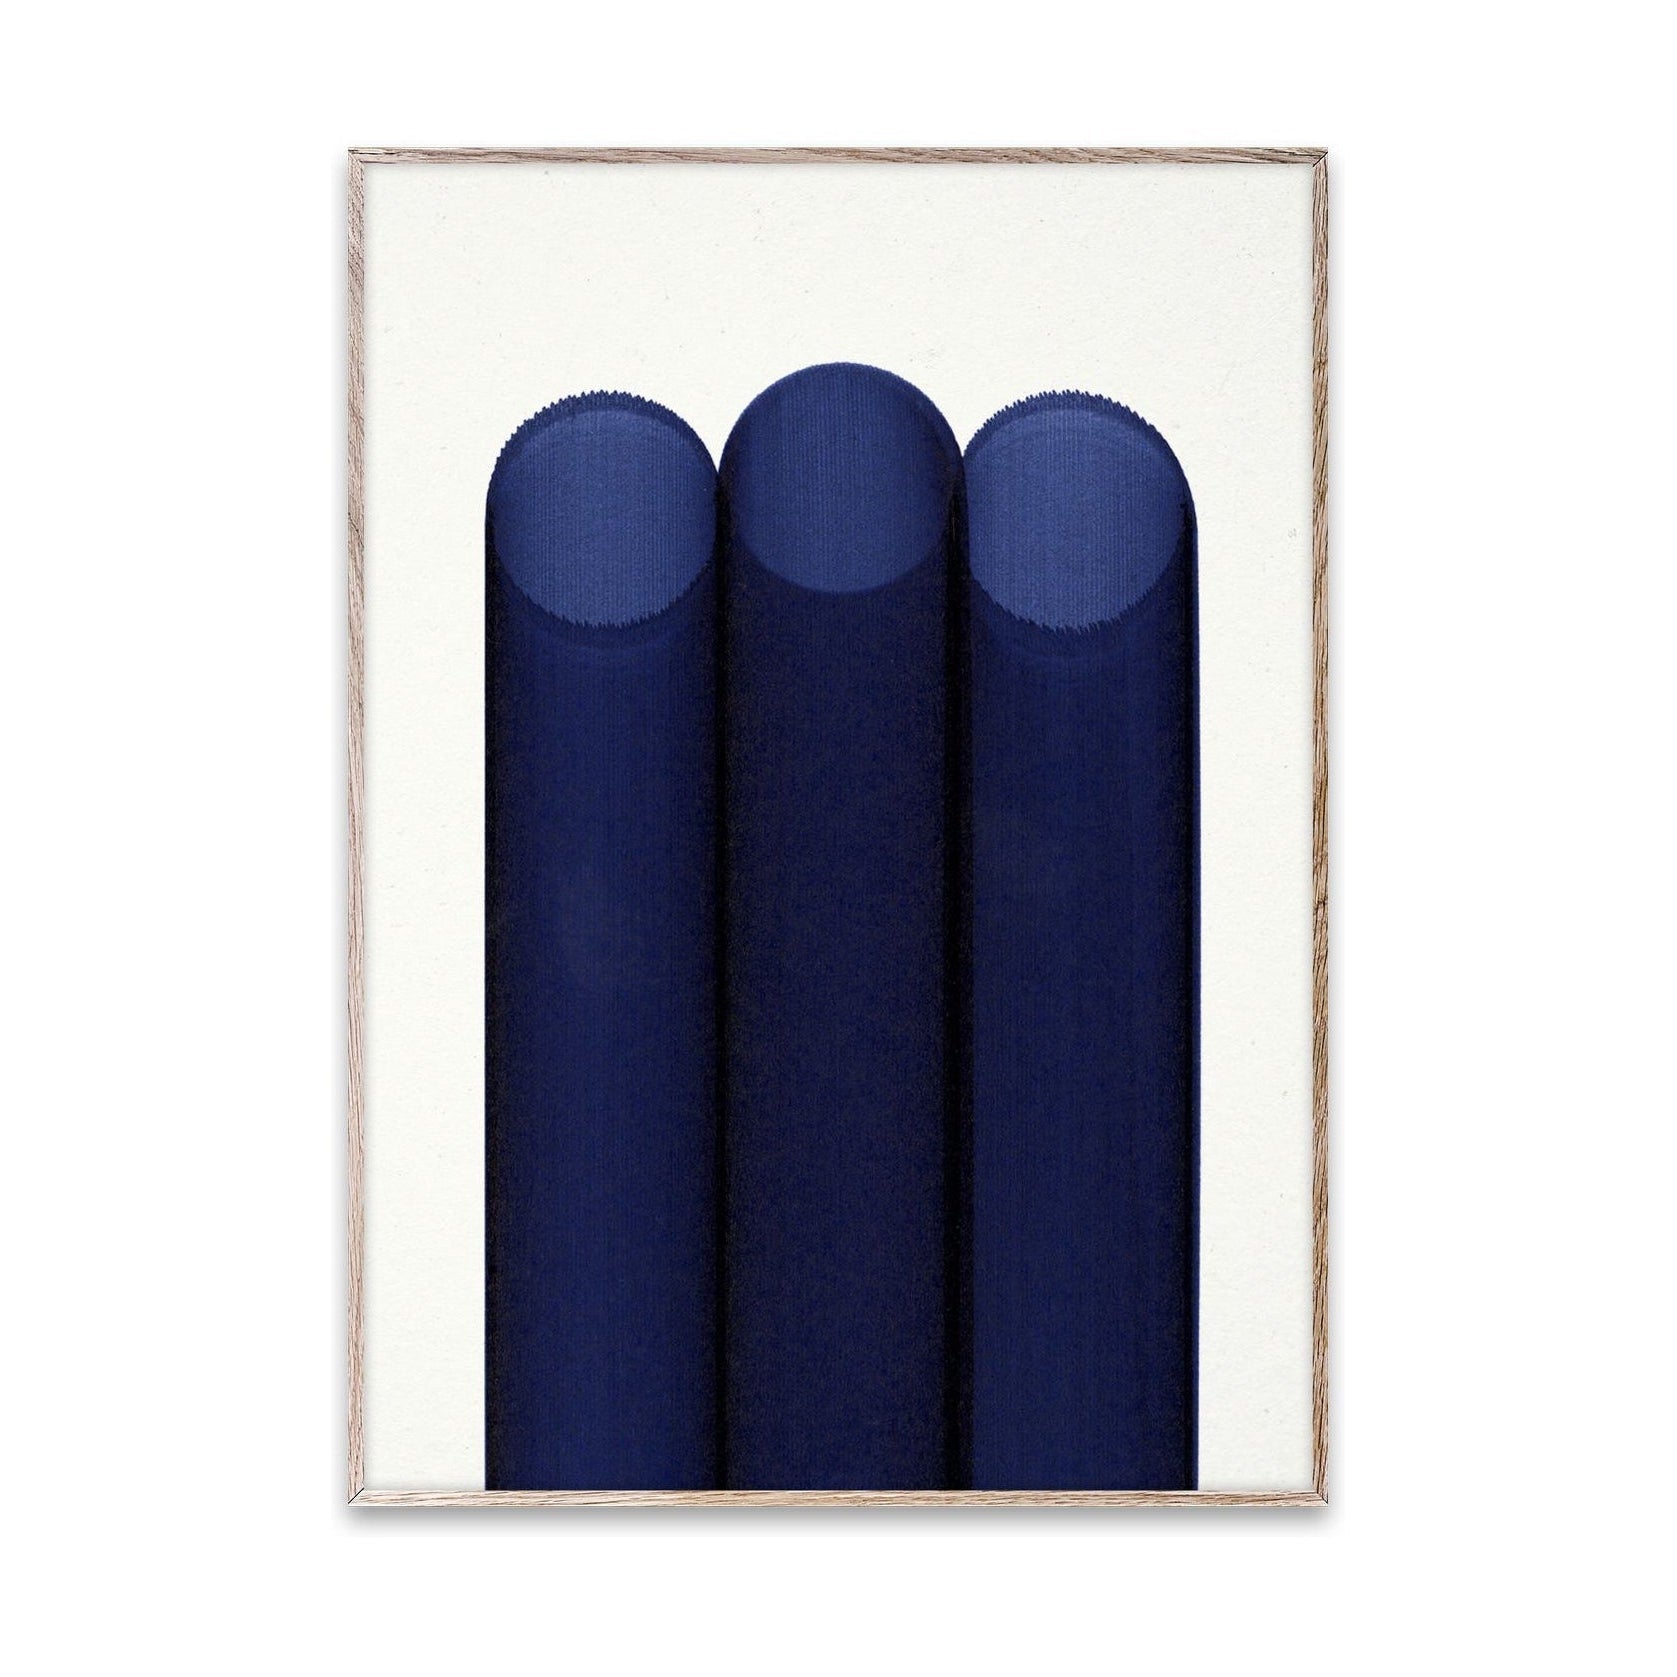 Paper Collective Pipes bleues affiche, 30x40 cm